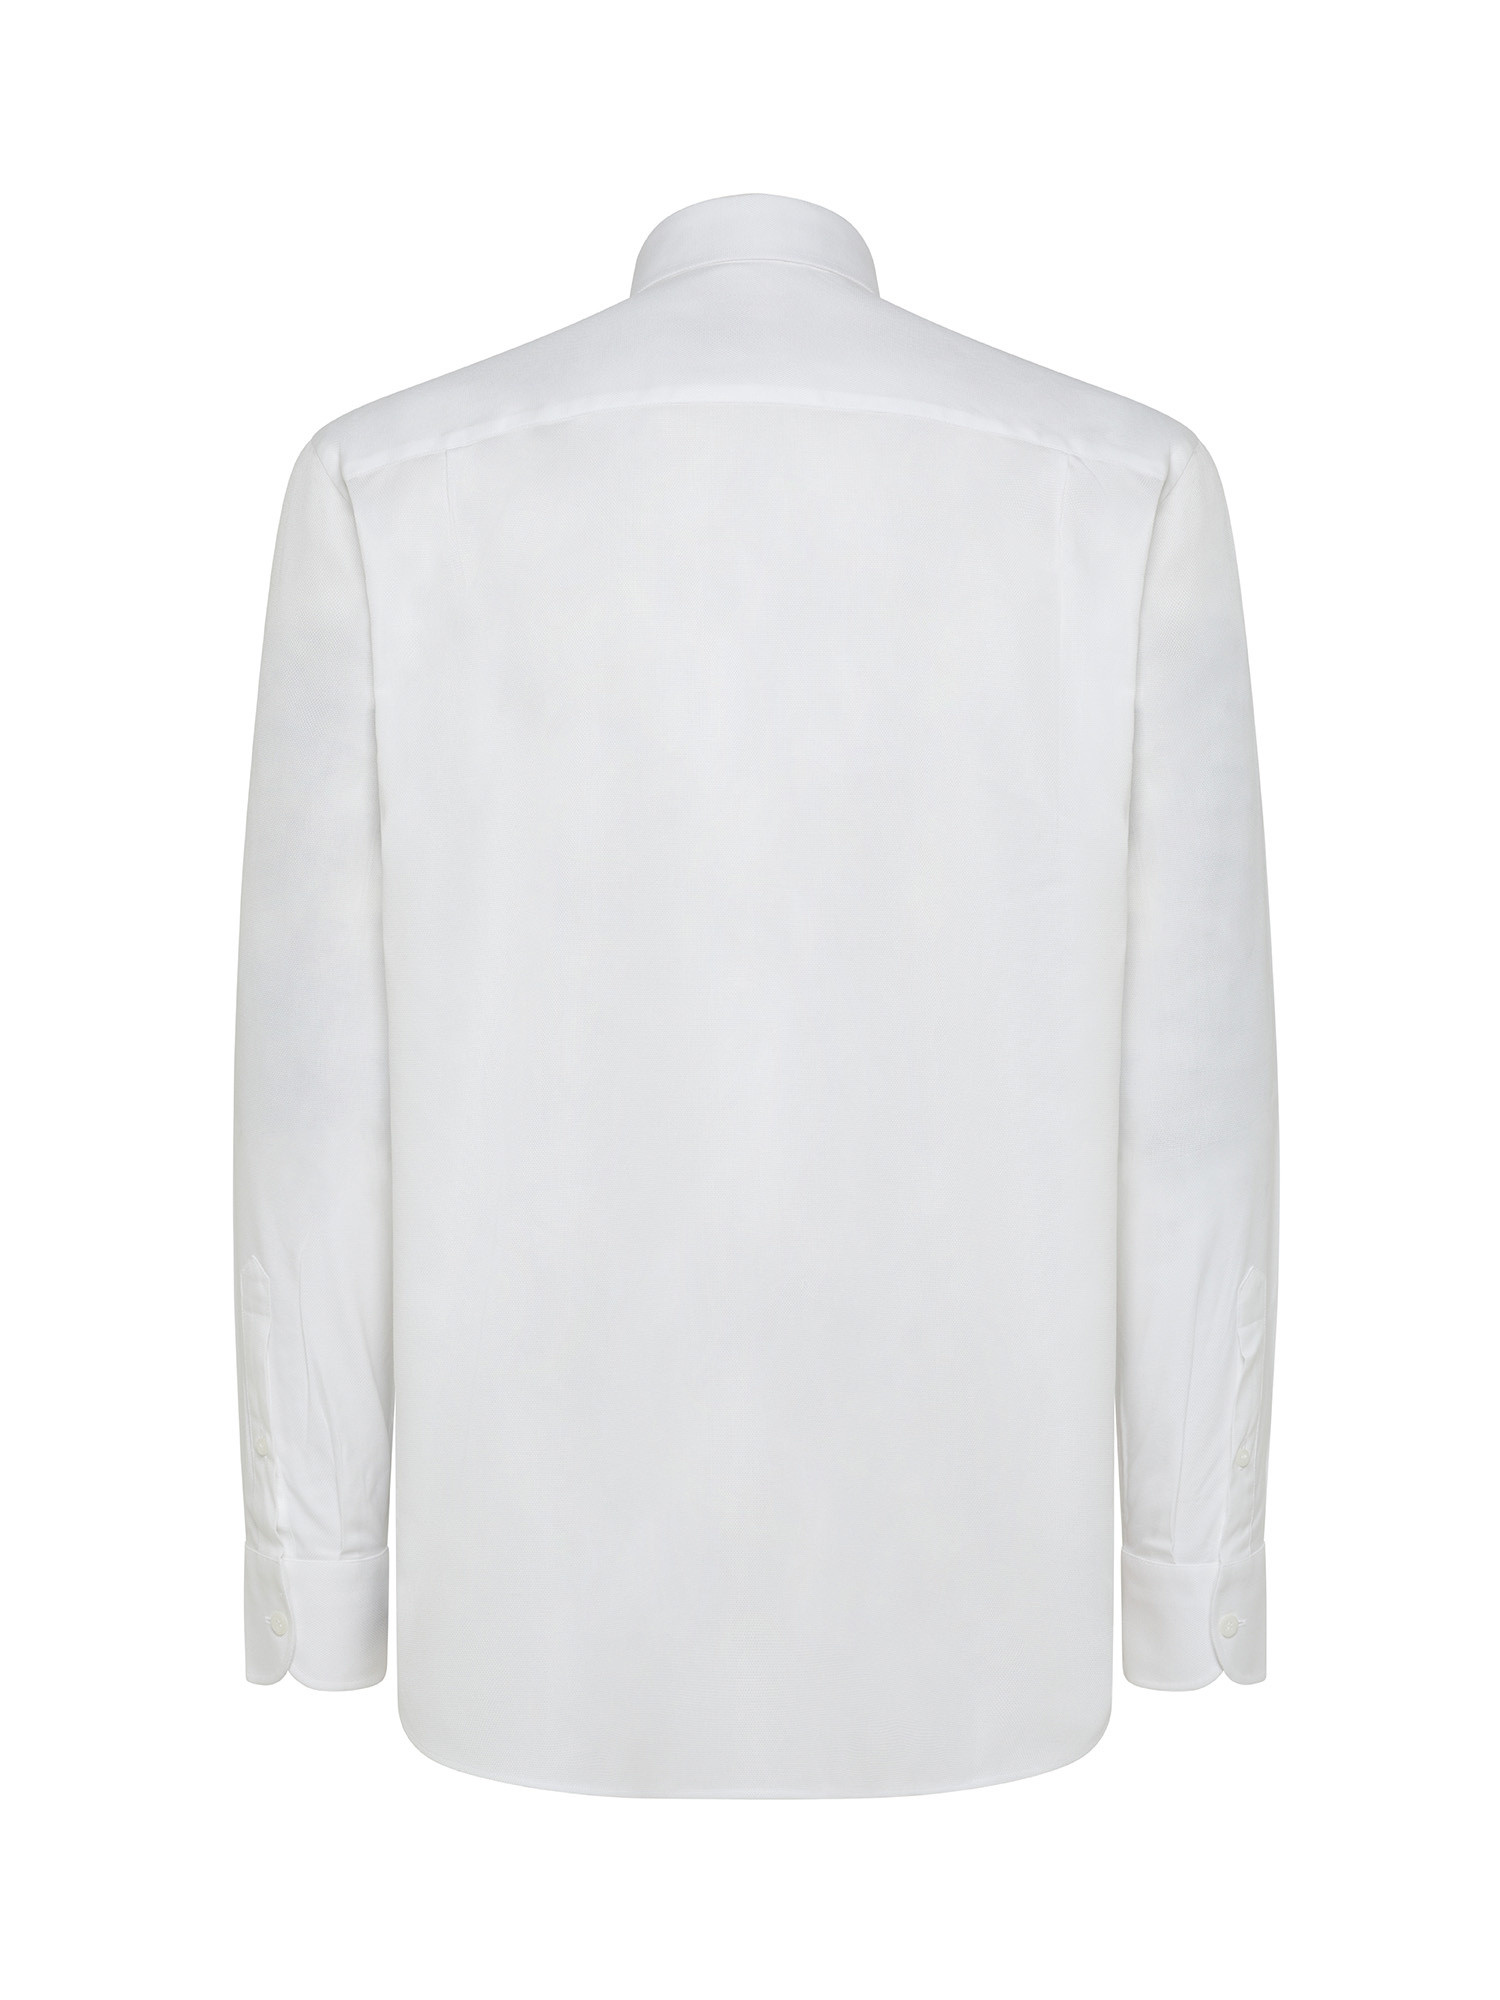 Luca D'Altieri - Camicia regular fit in puro cotone, Bianco, large image number 1